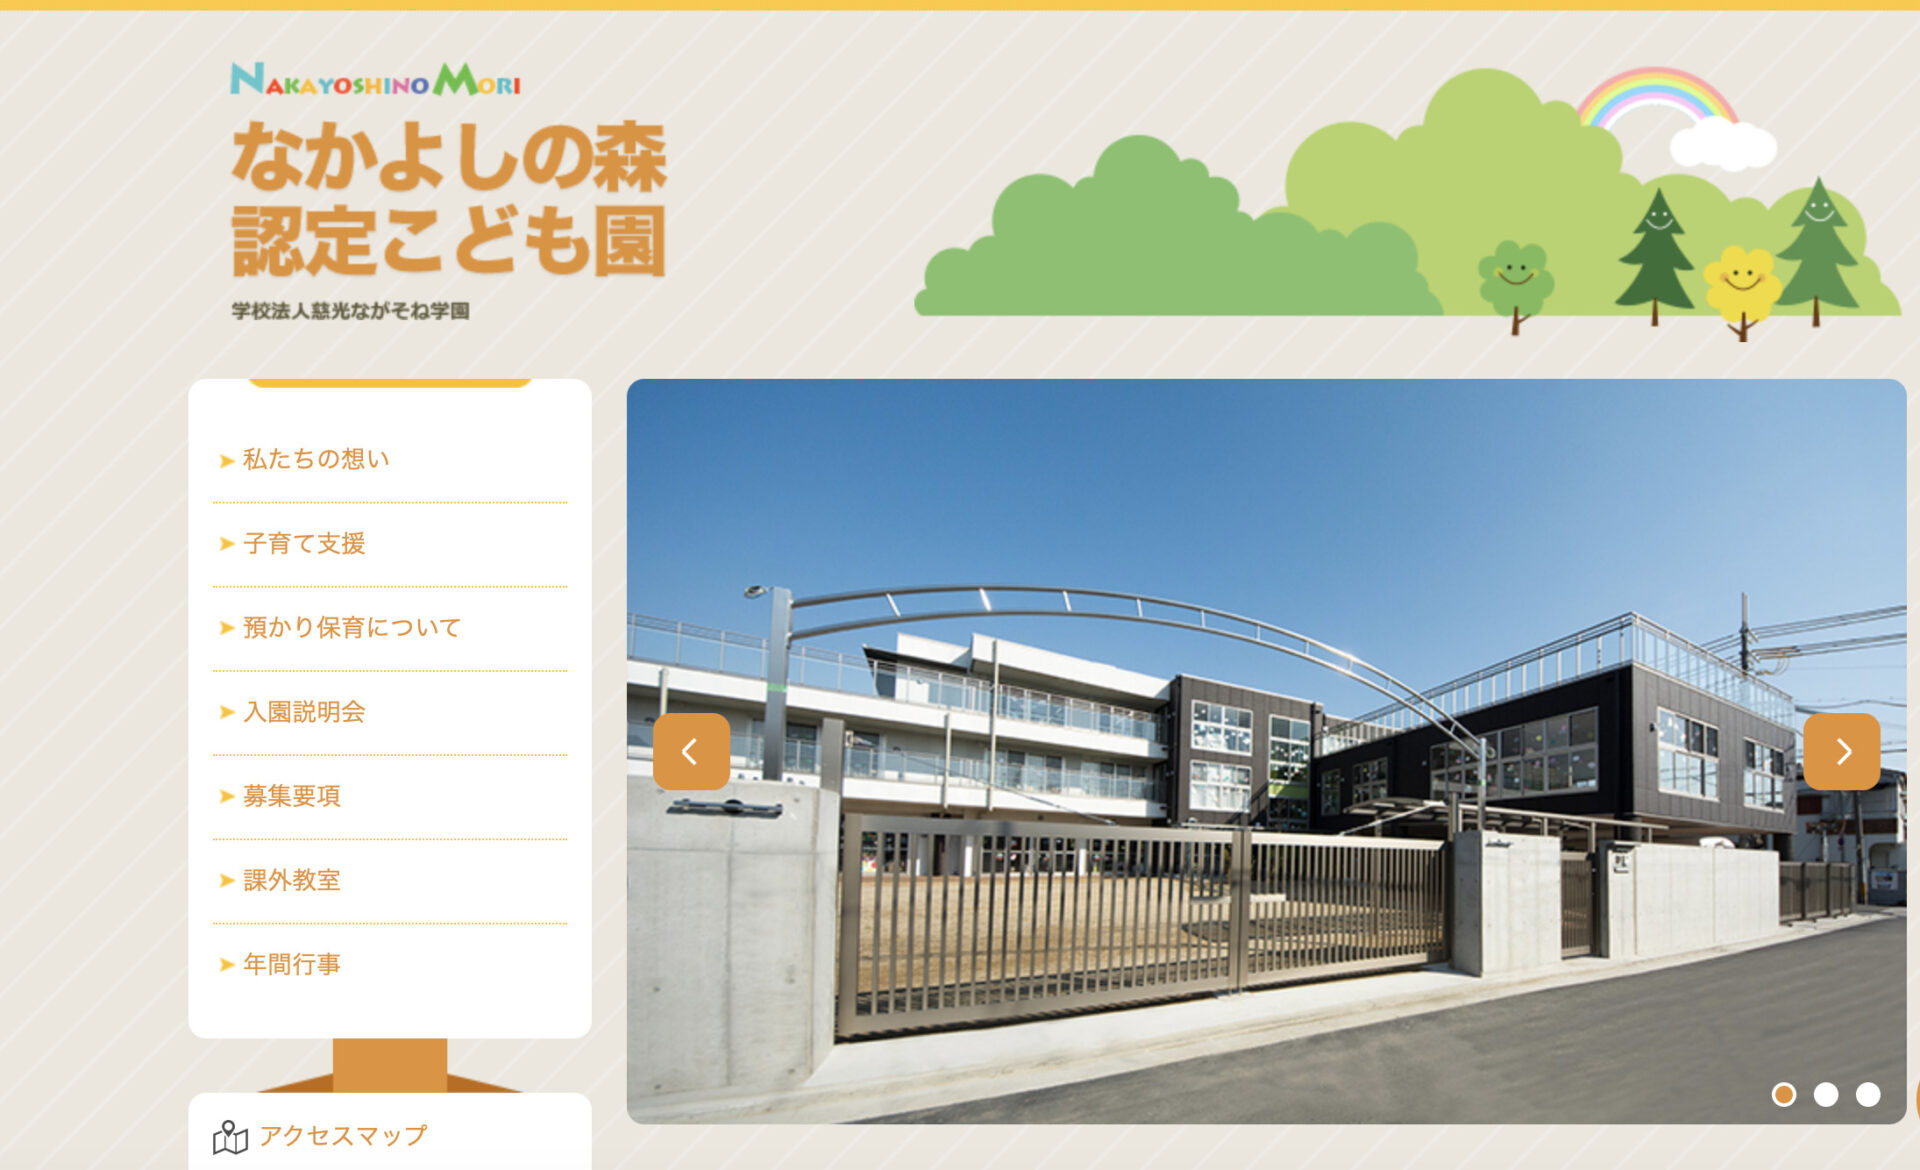 sakai-nakayoshinomori-kindergarten